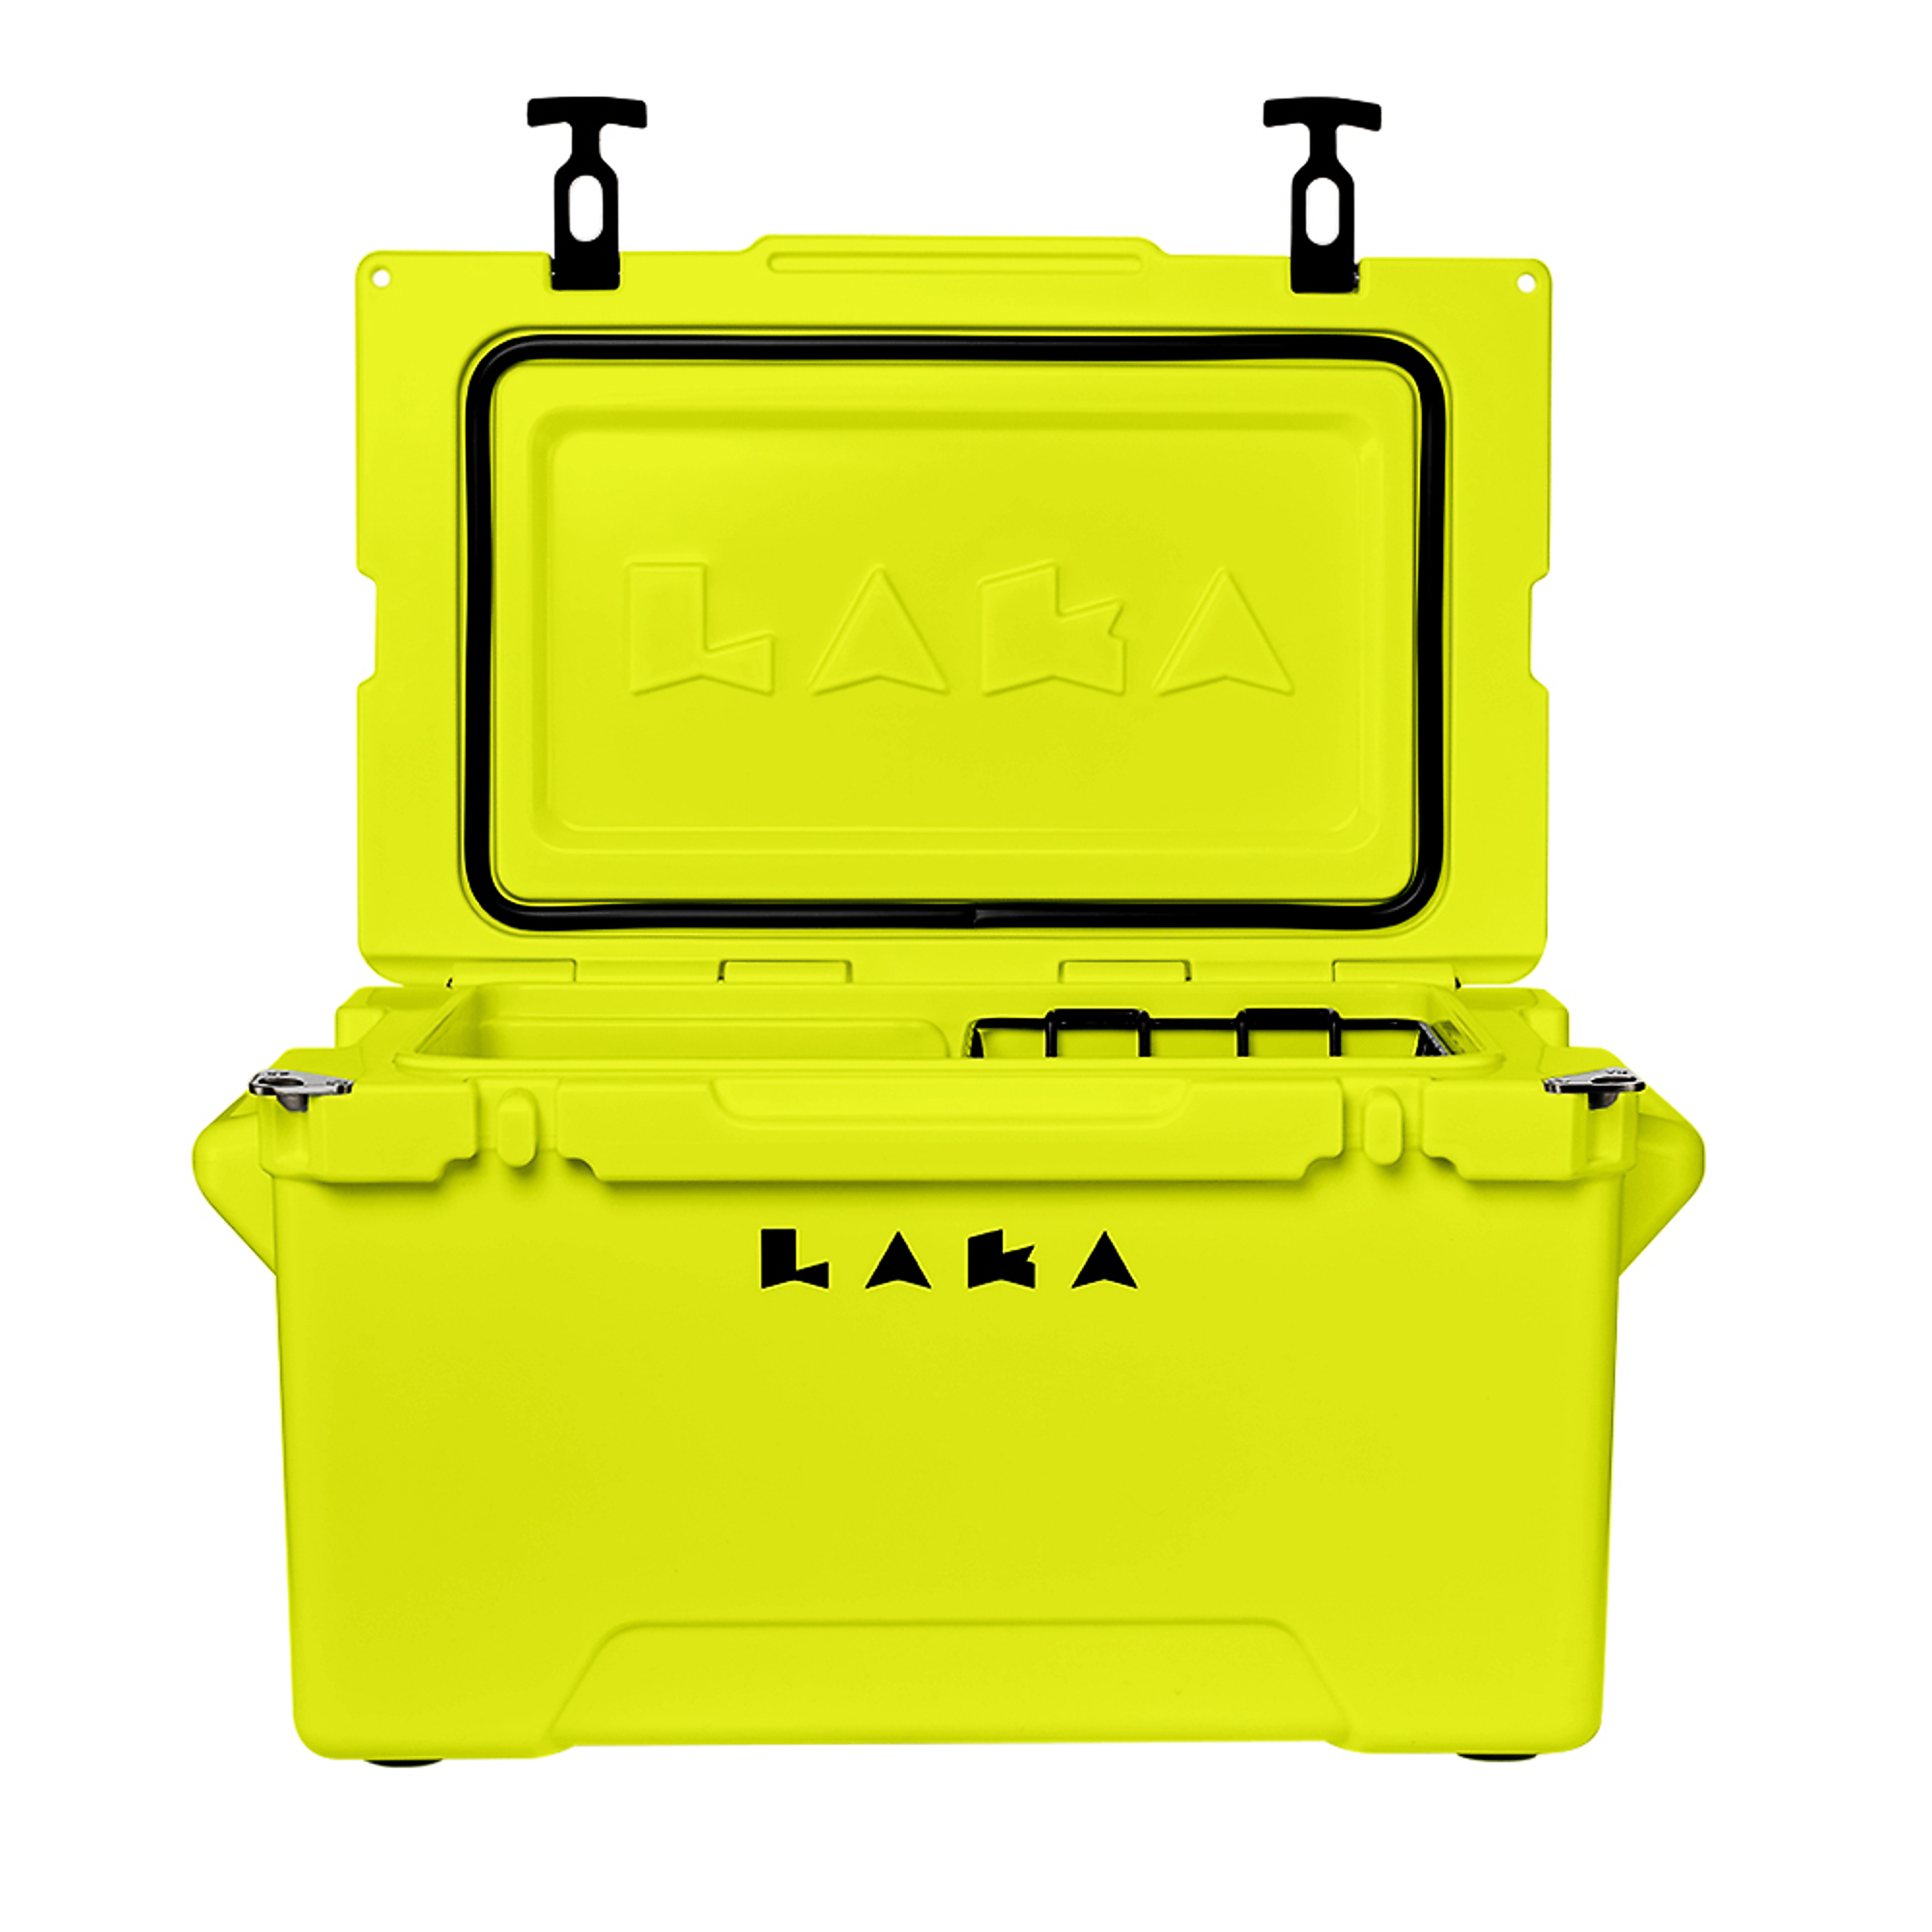 LAKA Cooler, 45 Quart Cooler - Yellow, Capacity 11.25 Gal, Model 1085